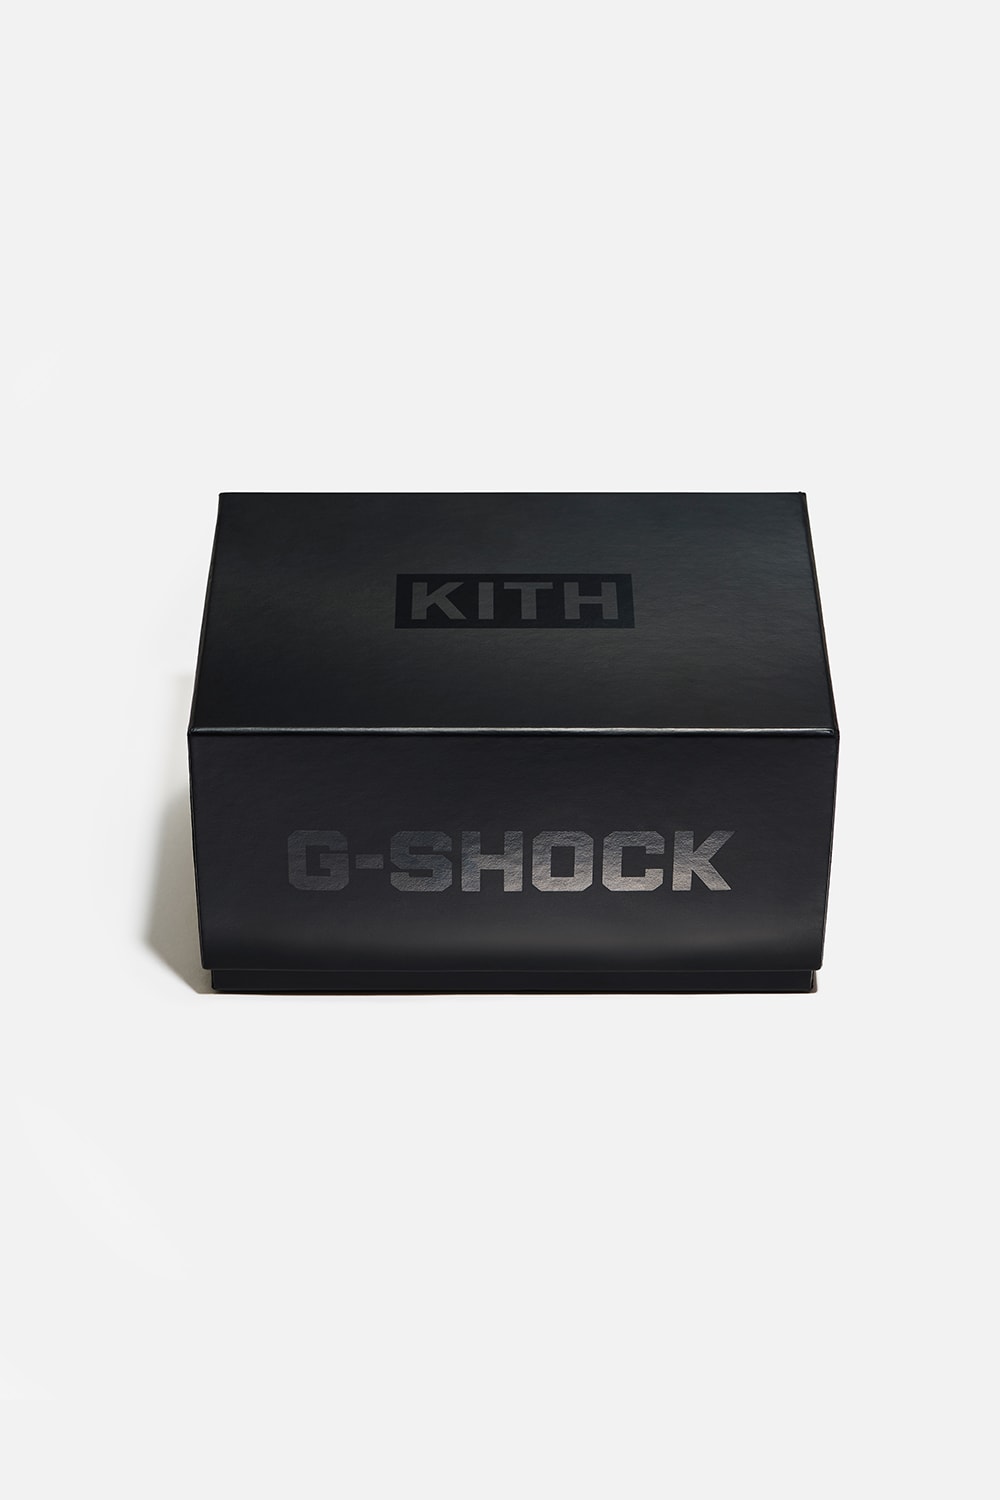 KITH Casio G-SHOCK GM-6900 Rose Gold